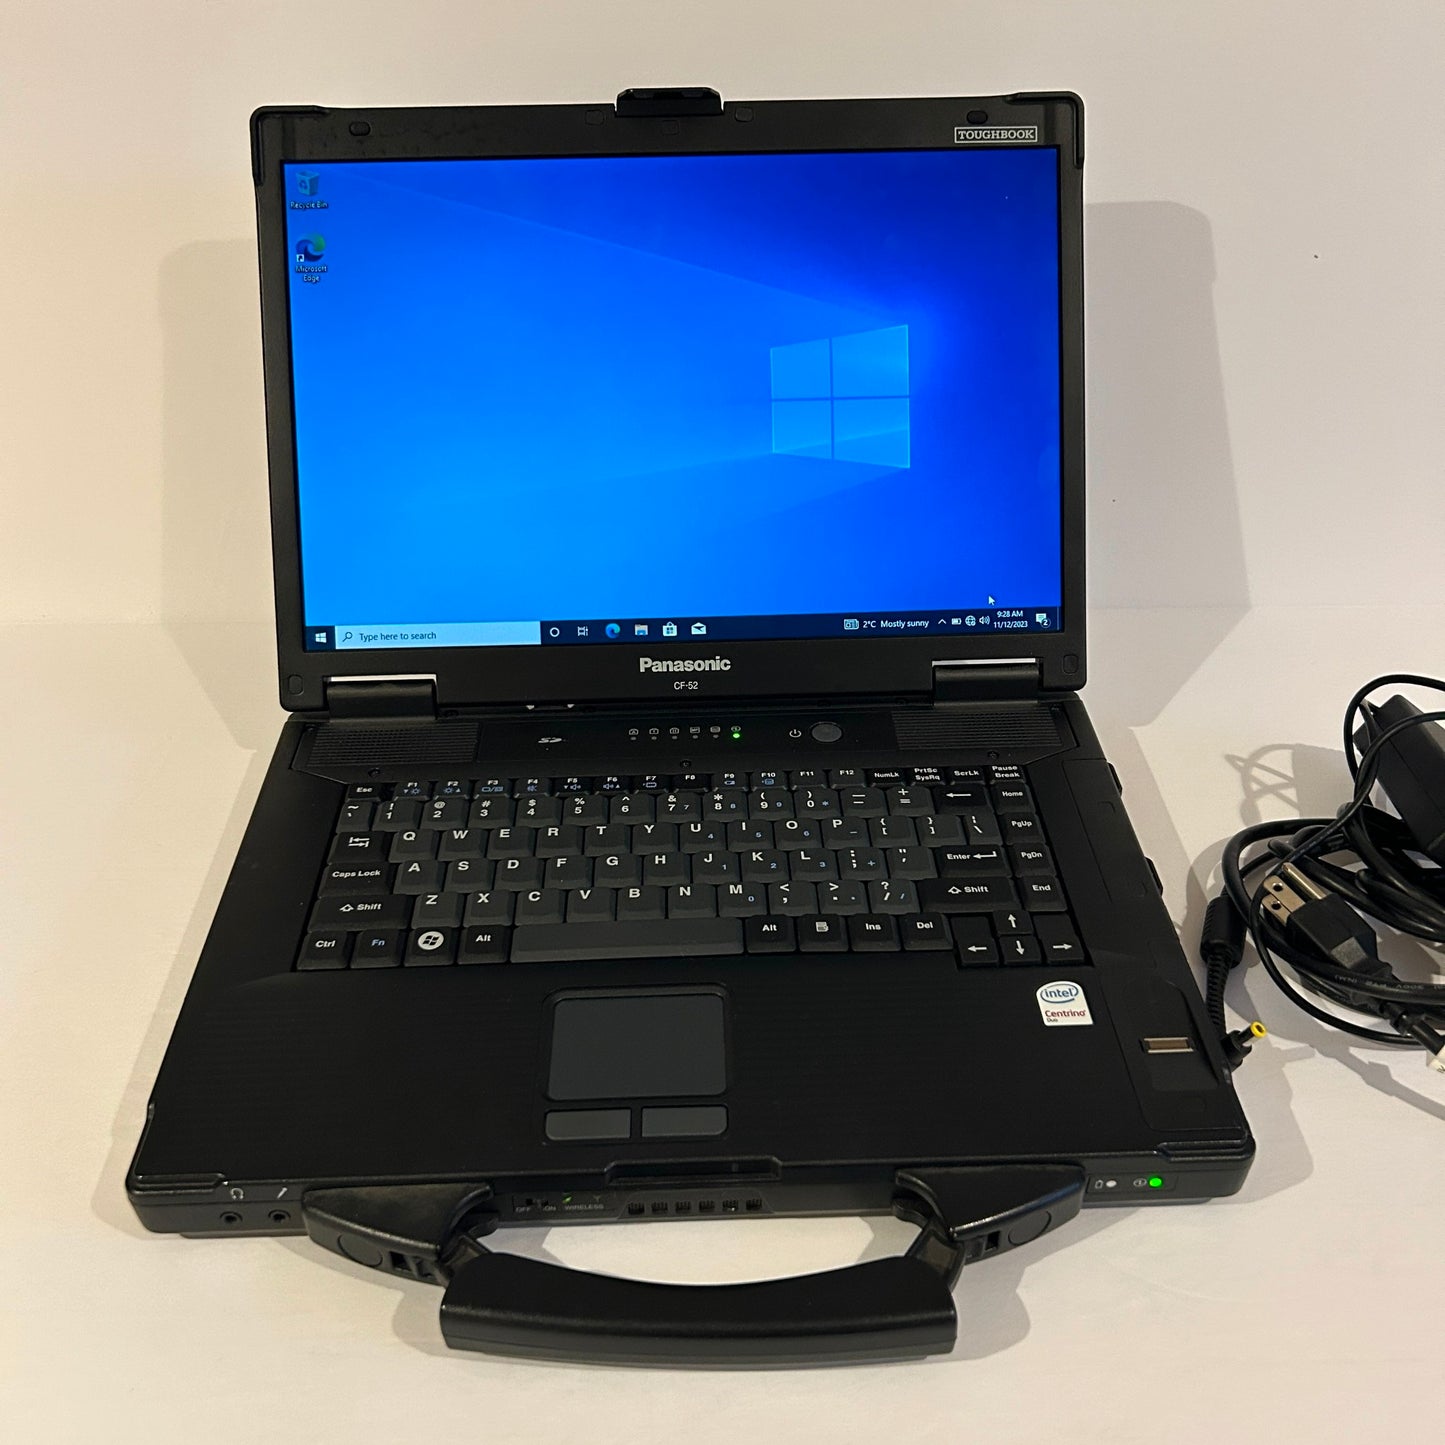 Panasonic Toughbook Rugged Laptop - 1.80 Ghz Intel Centrino - CF-52